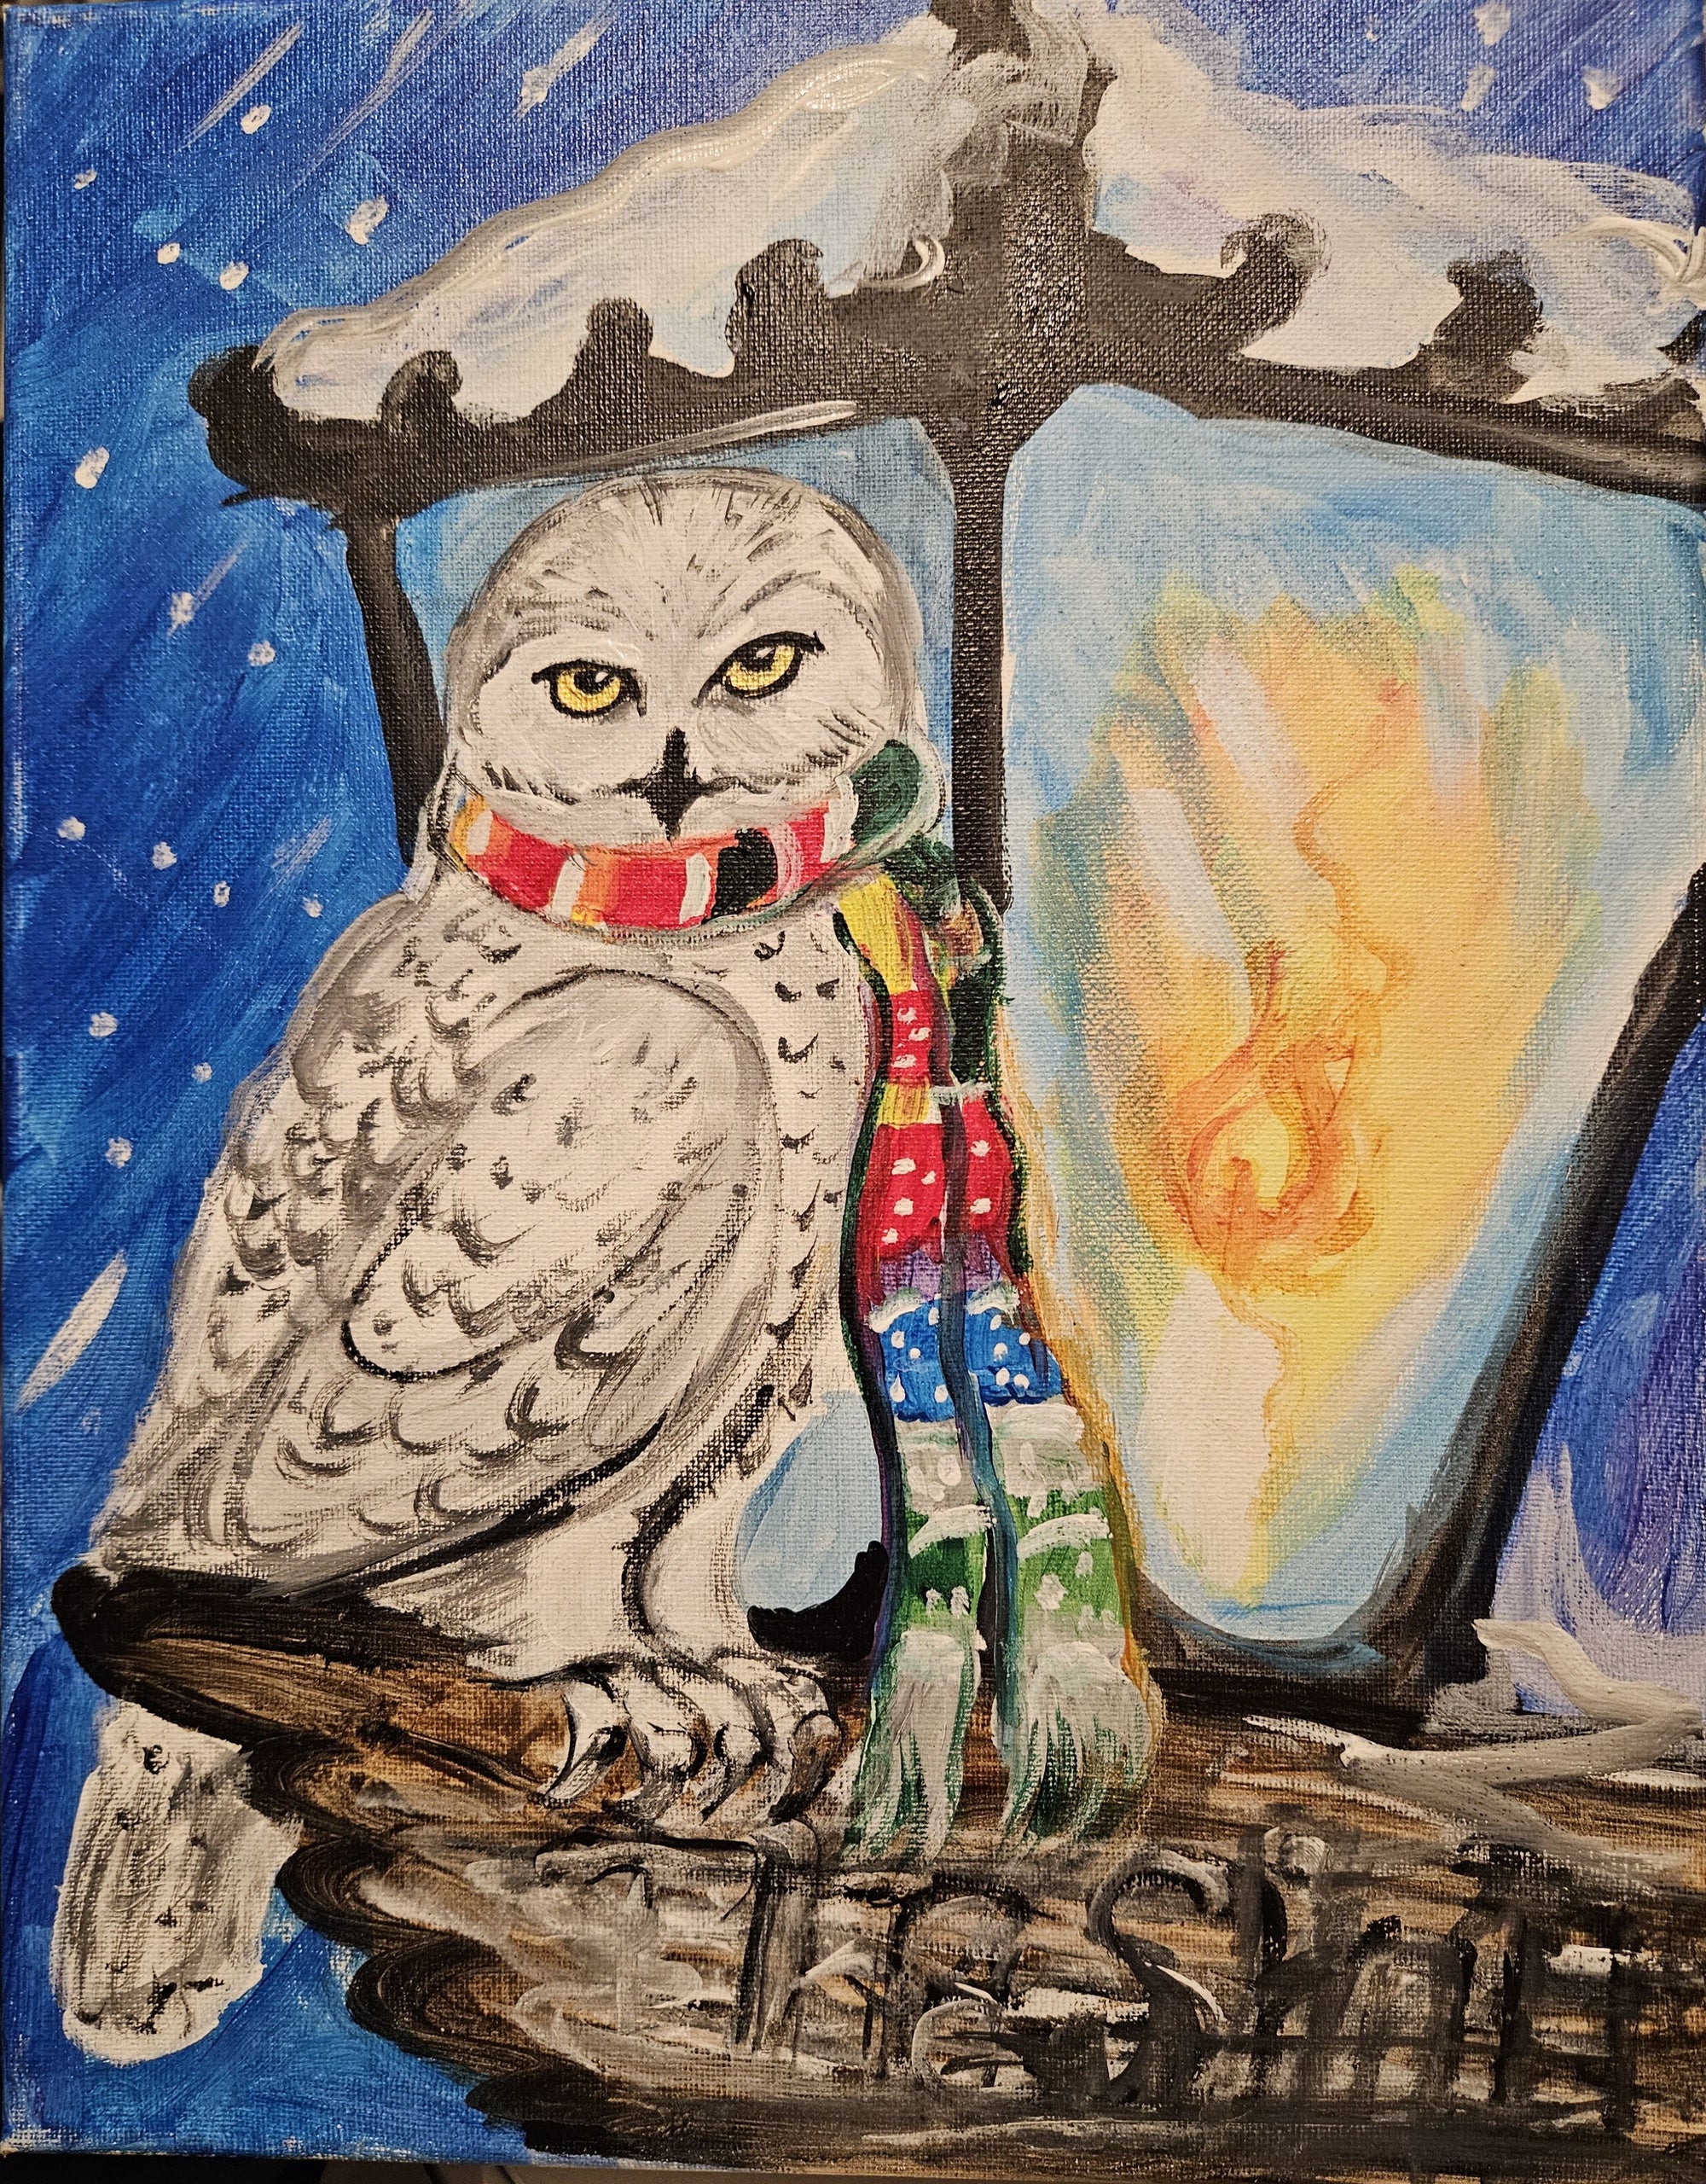 PAINTING CLASS: Snowy Owl on Canvas